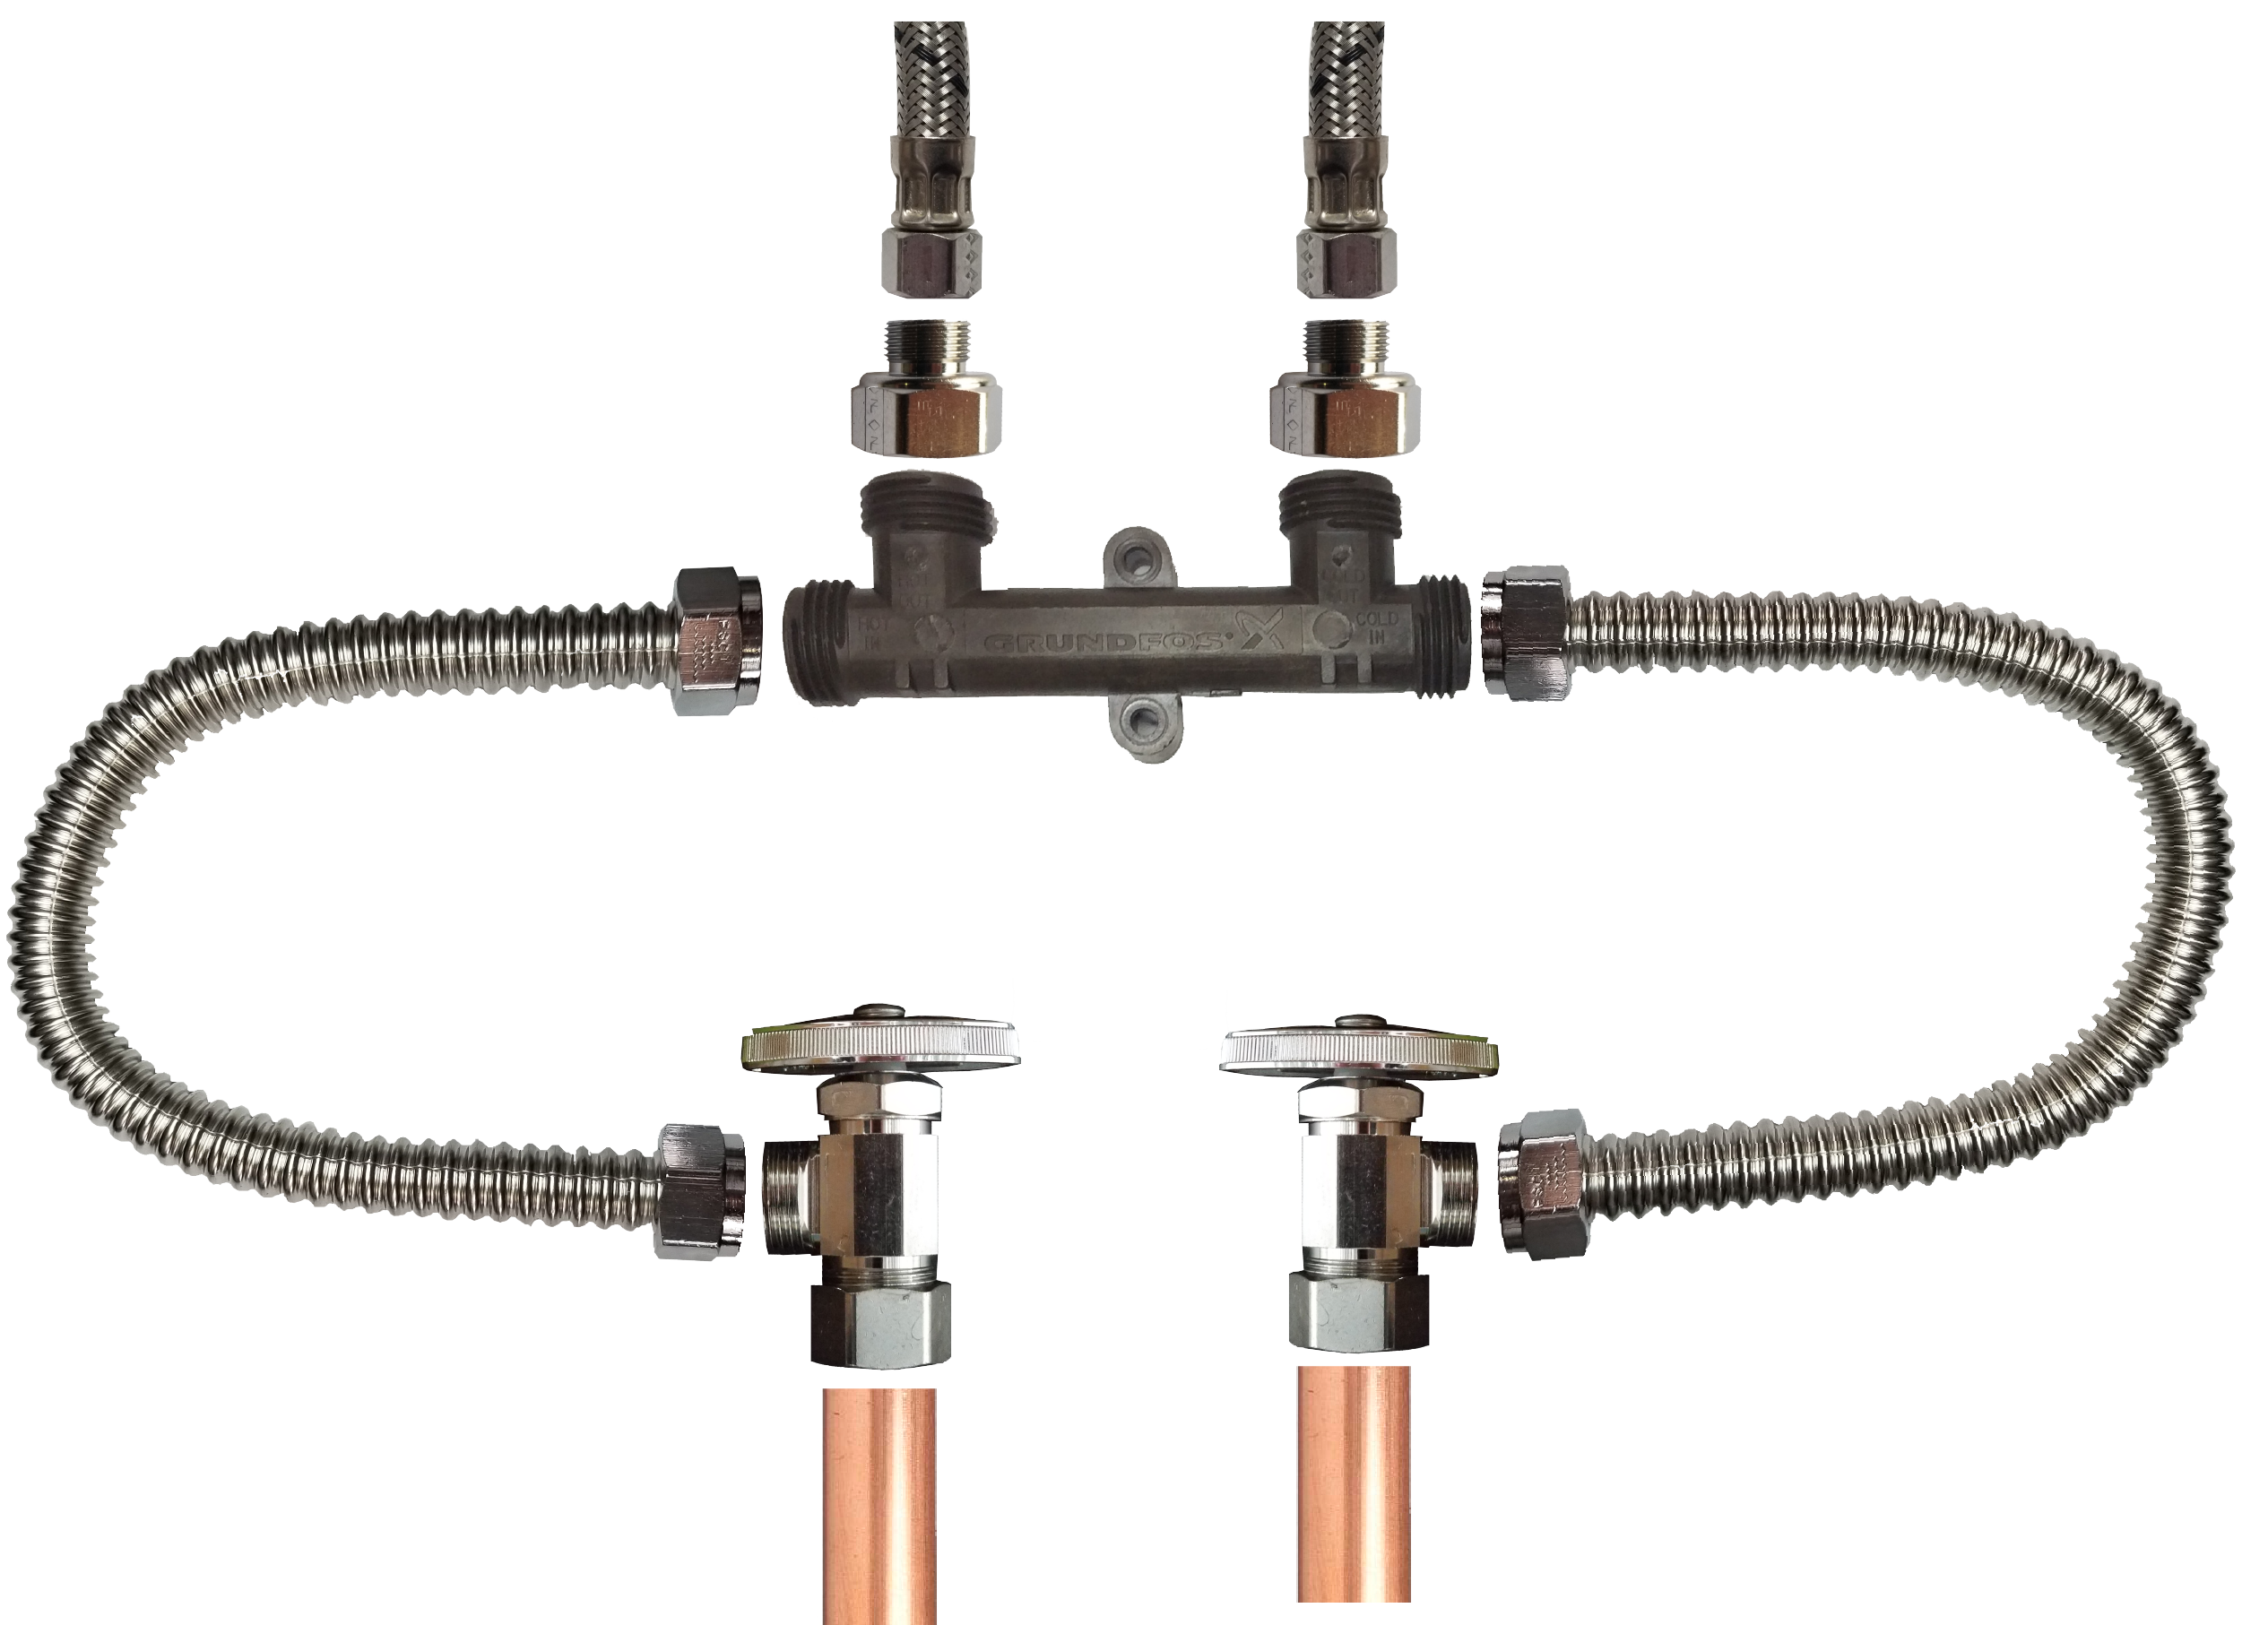 Picture of Advanced Bridge valve.